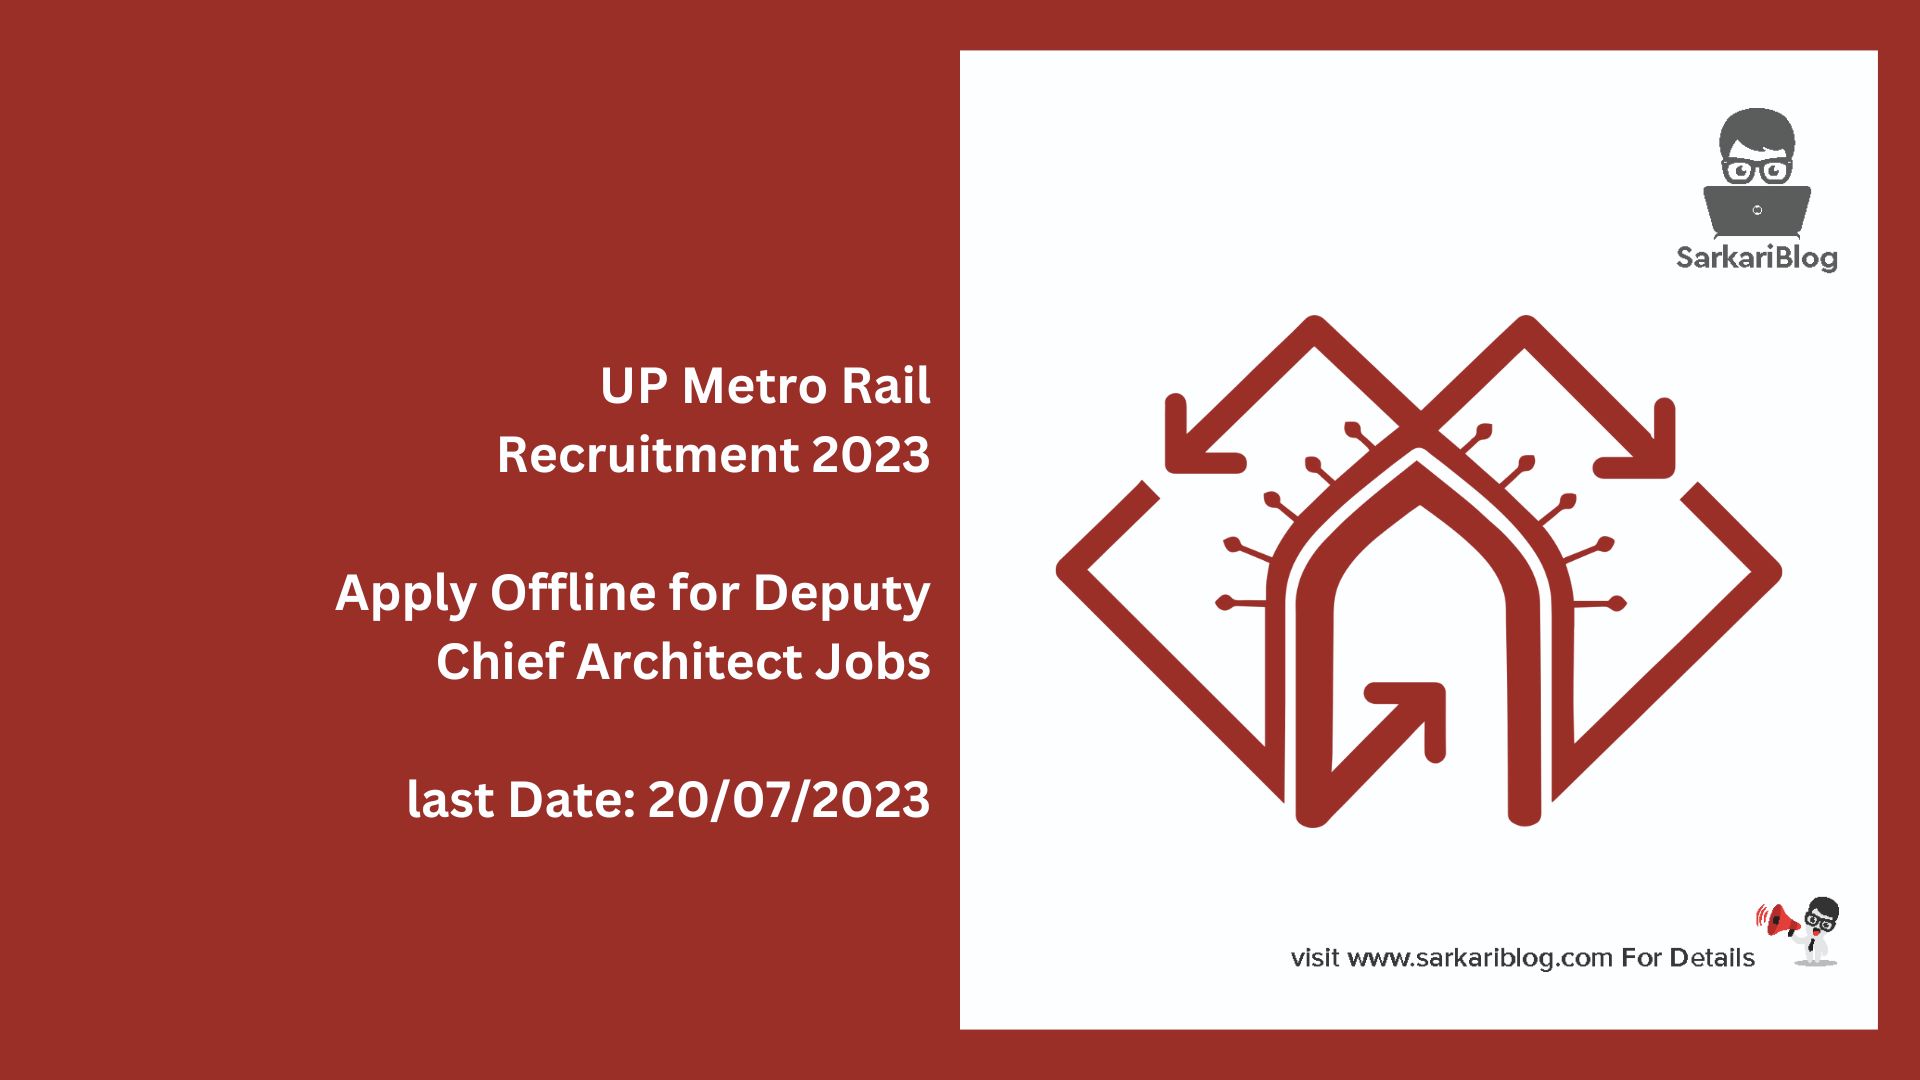 UP Metro Rail Recruitment 2023